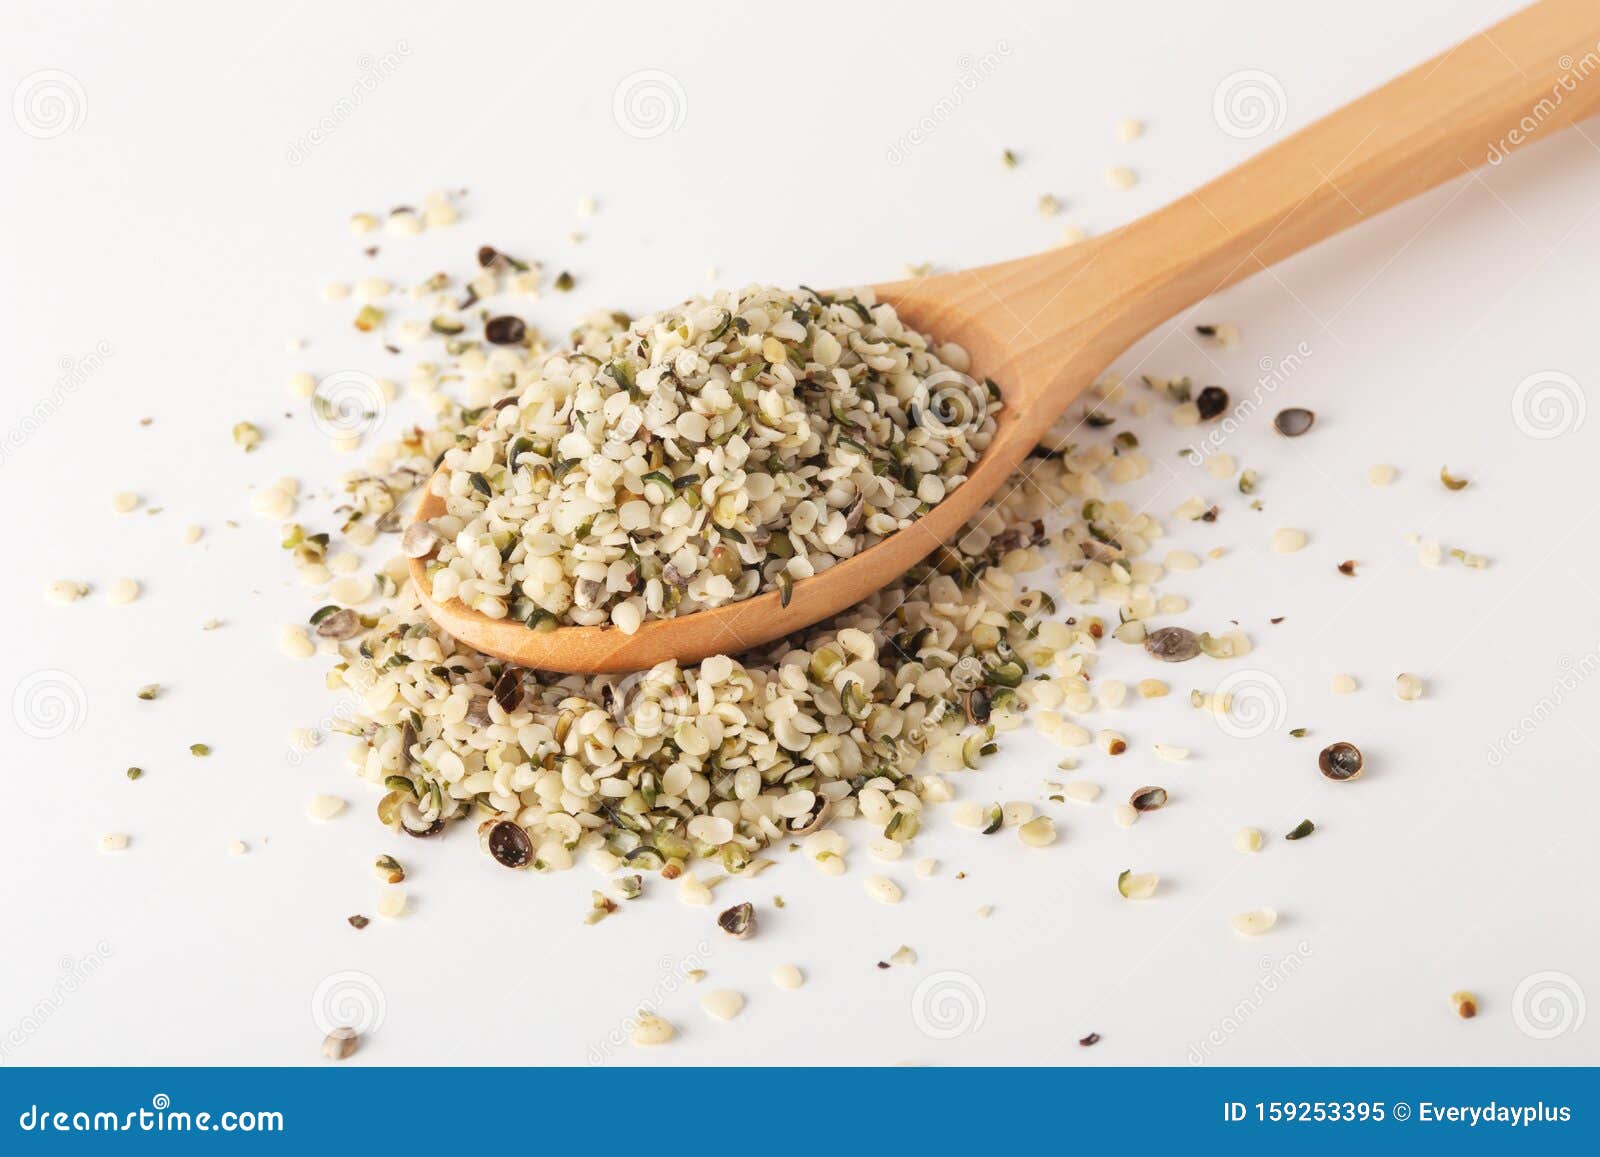 hemp seeds in wooden spoon